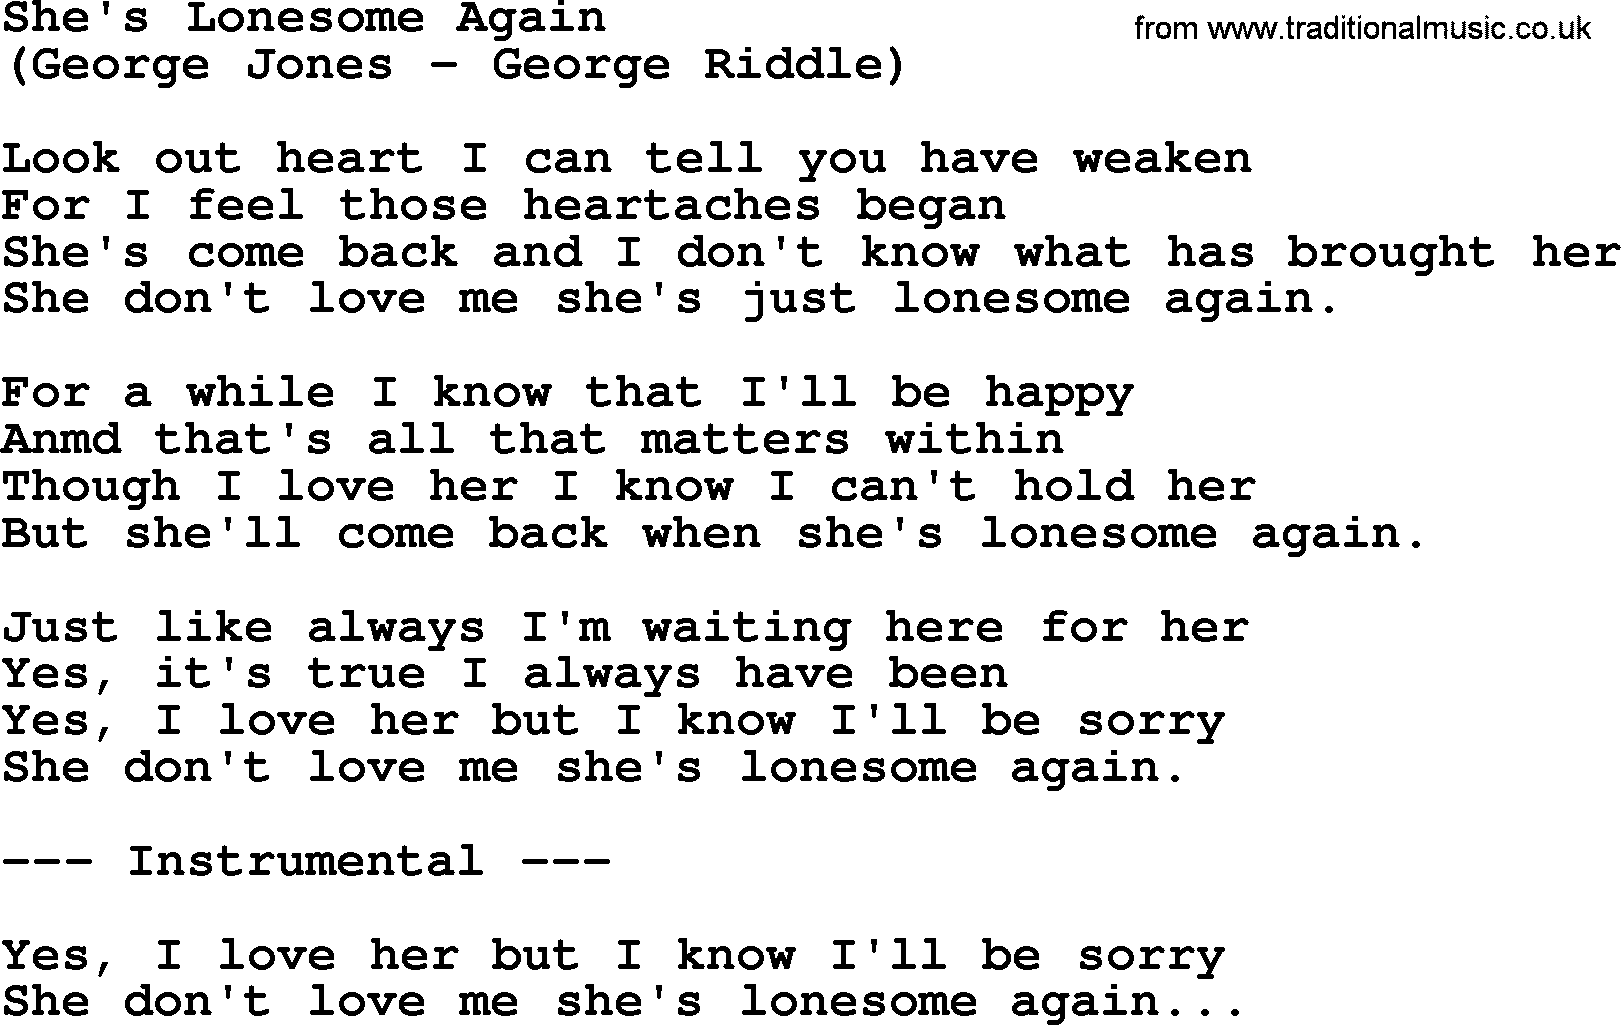 George Jones song: She's Lonesome Again, lyrics